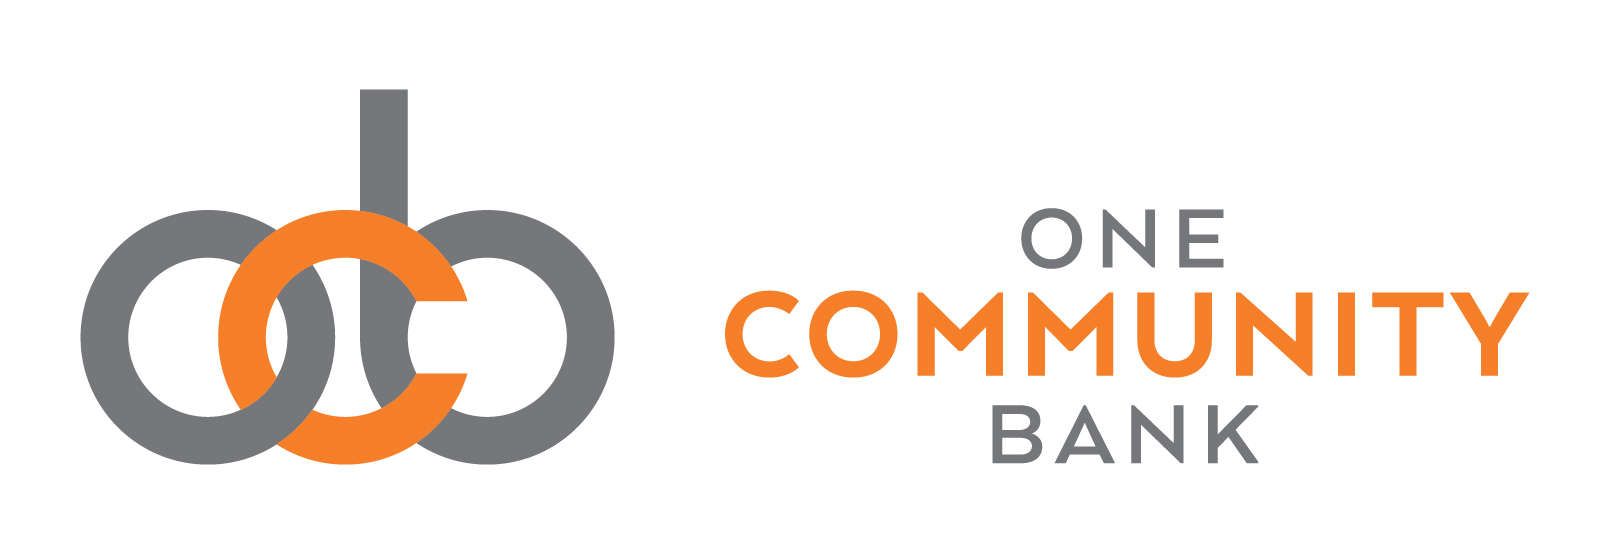 One Community Bank - Oregon